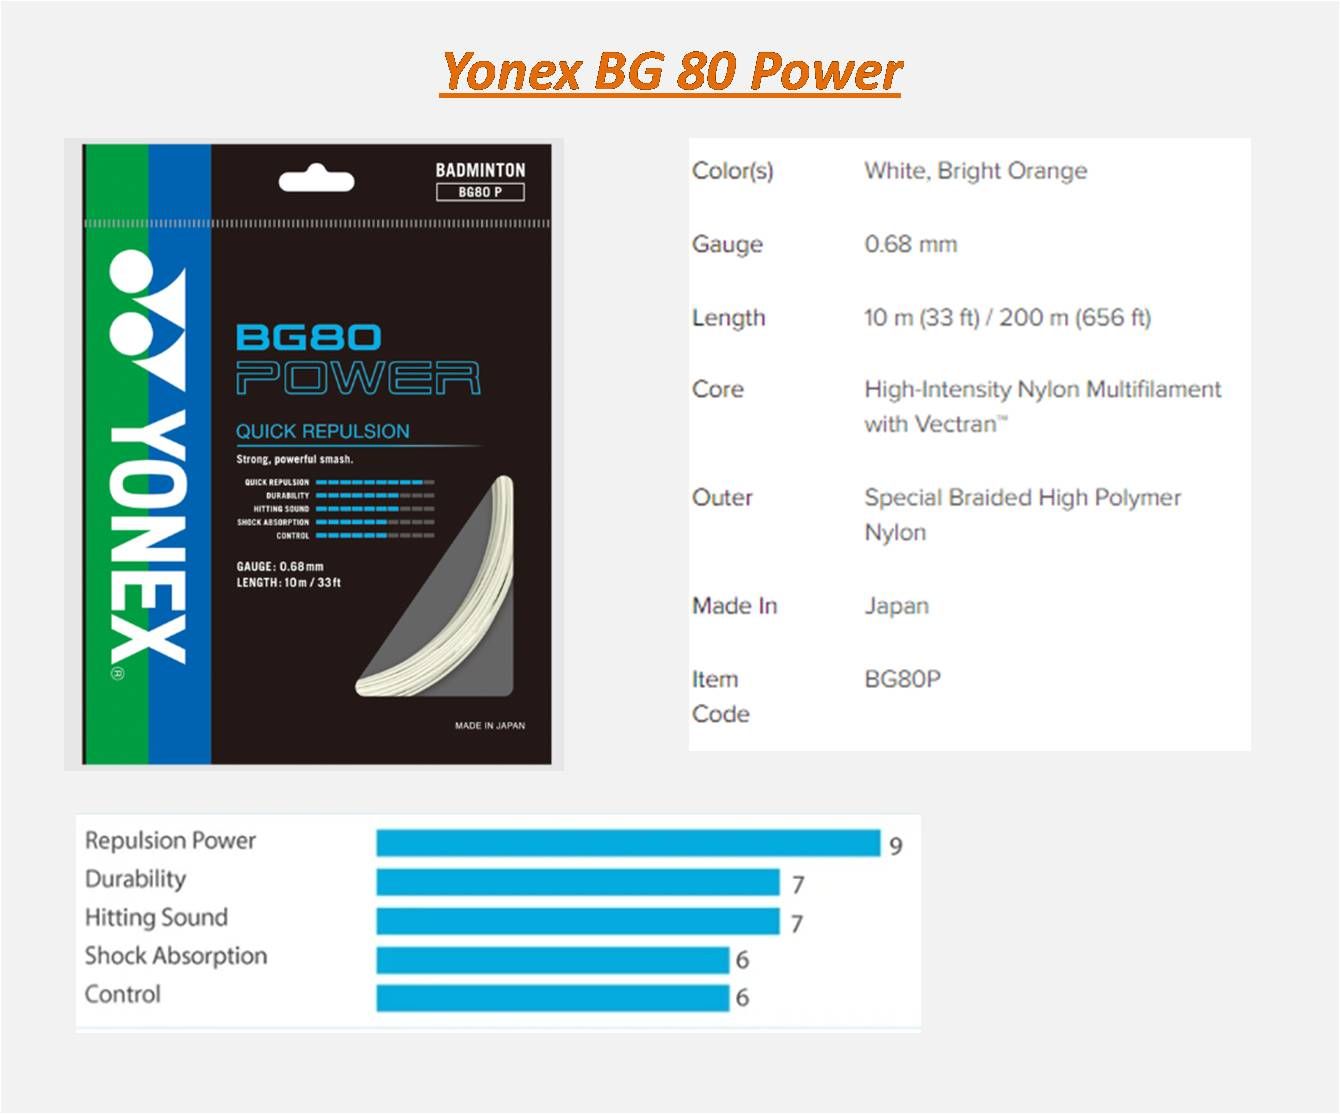 Yonex_BG_80_Power_Details_khelmart